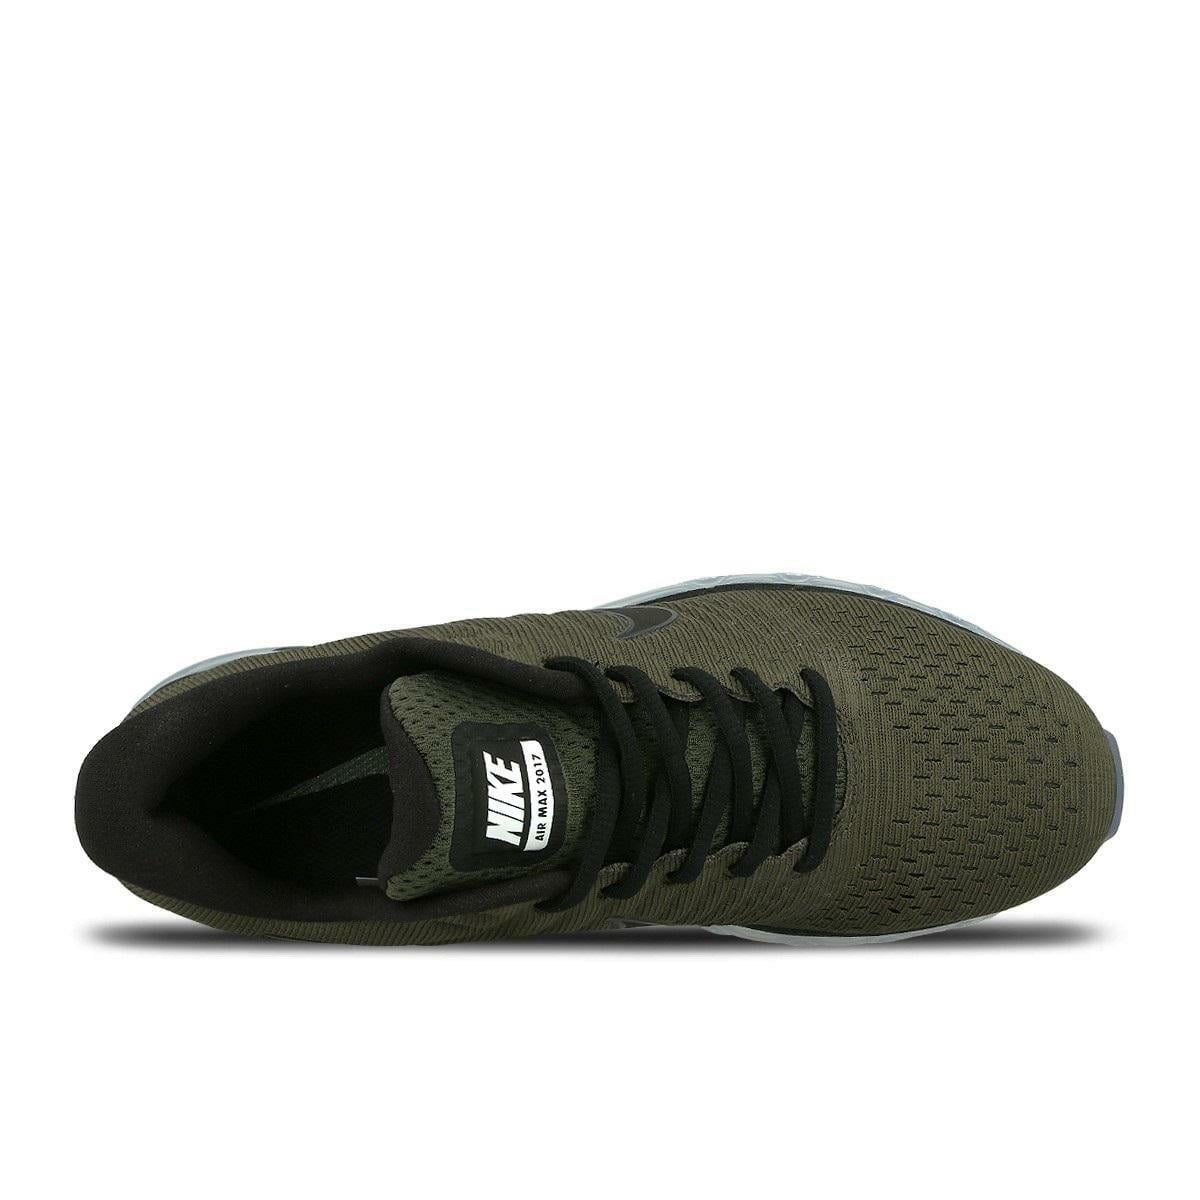 Soberano coger un resfriado tuyo Nike Men's Air Max 2017 Running Shoes (9 M US, Cargo Khaki/Black) -  Walmart.com